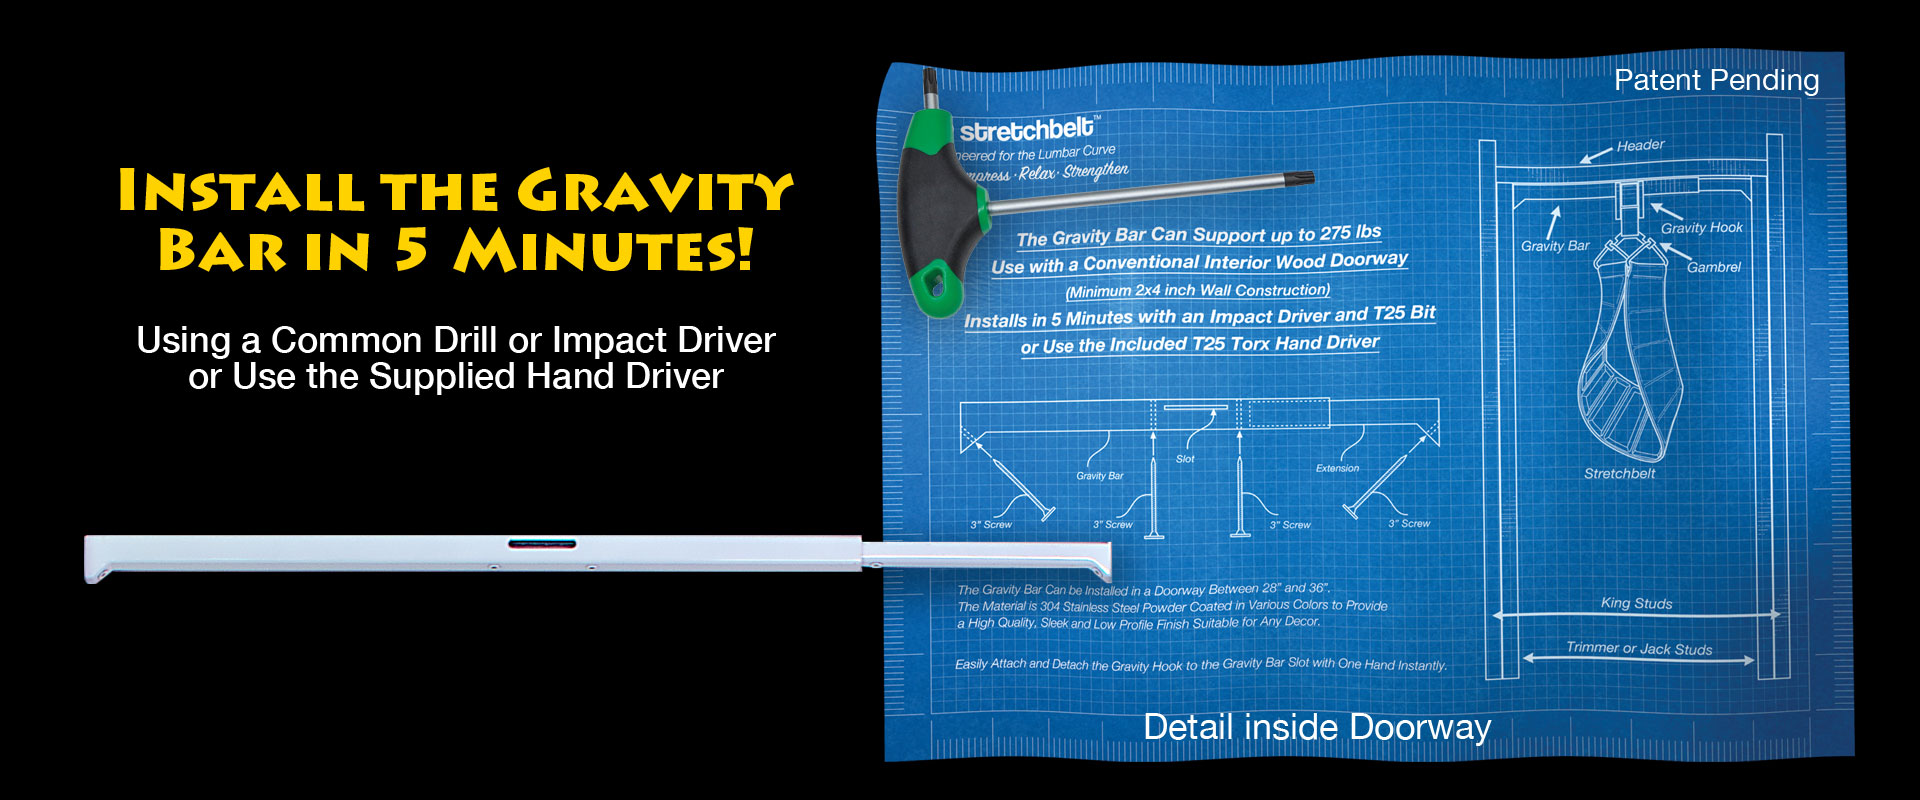 free instal Gravity Oddity